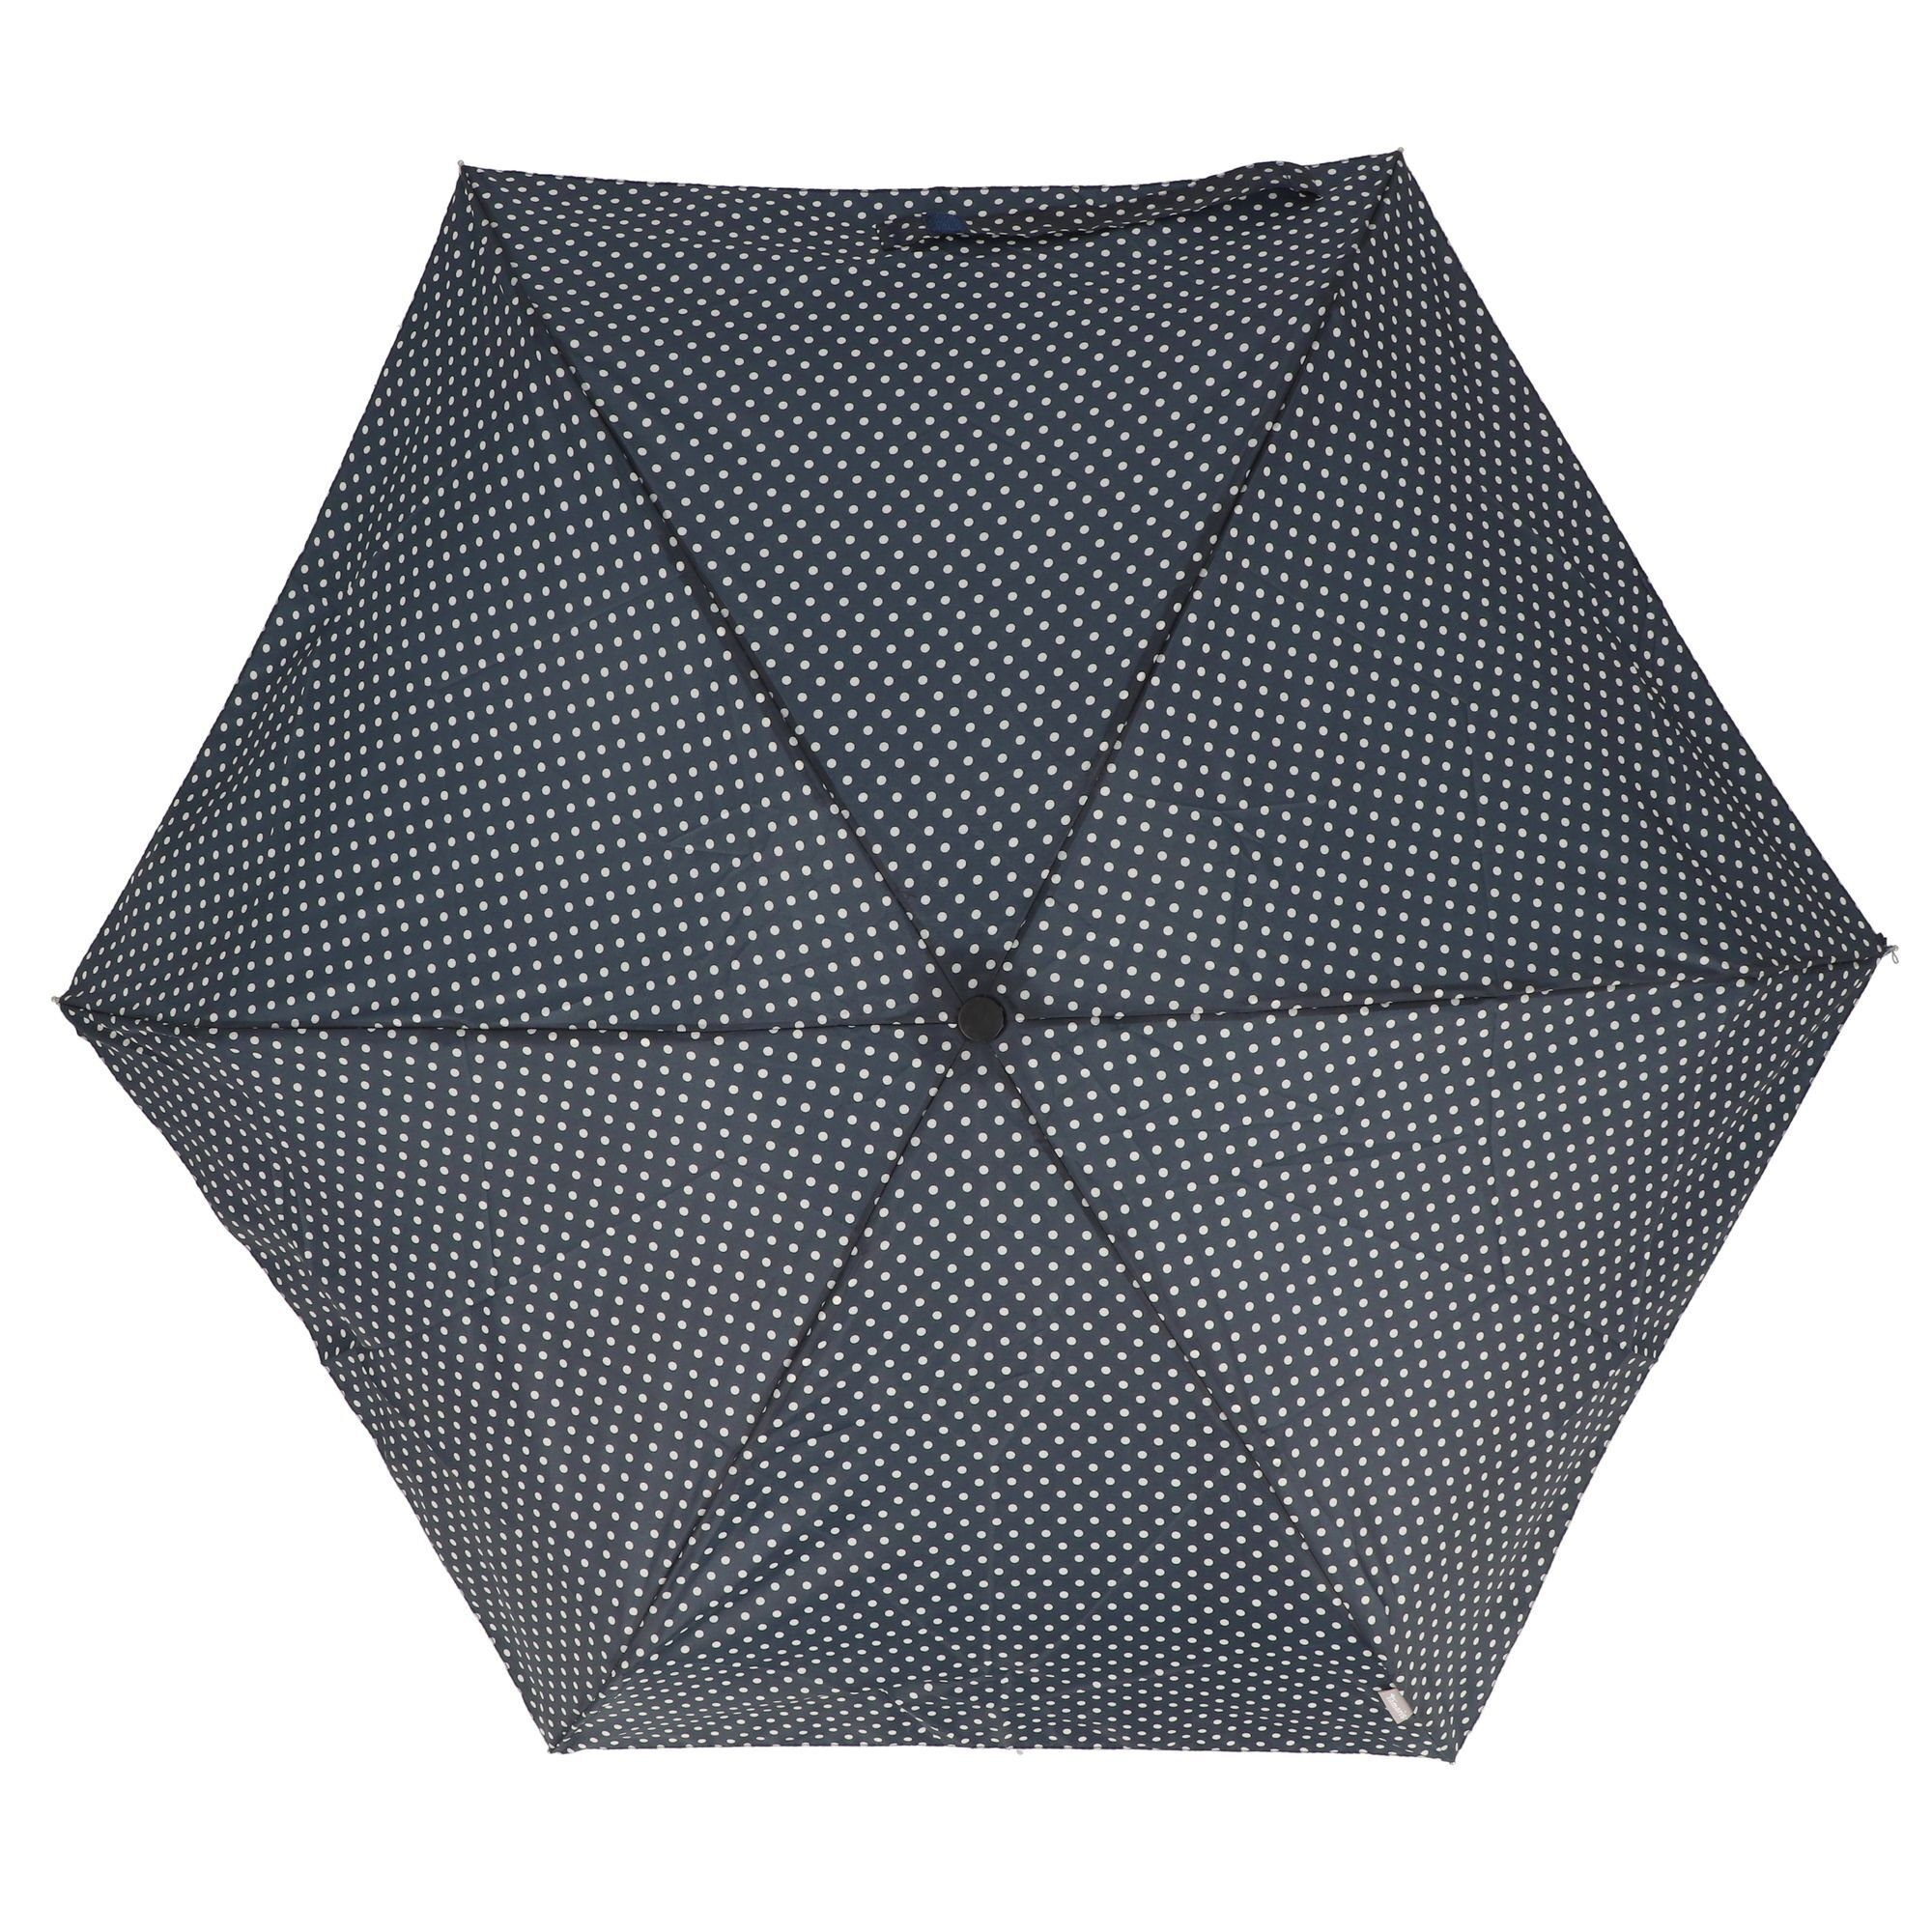 Tamaris Stockregenschirm Tambrella, 93cm